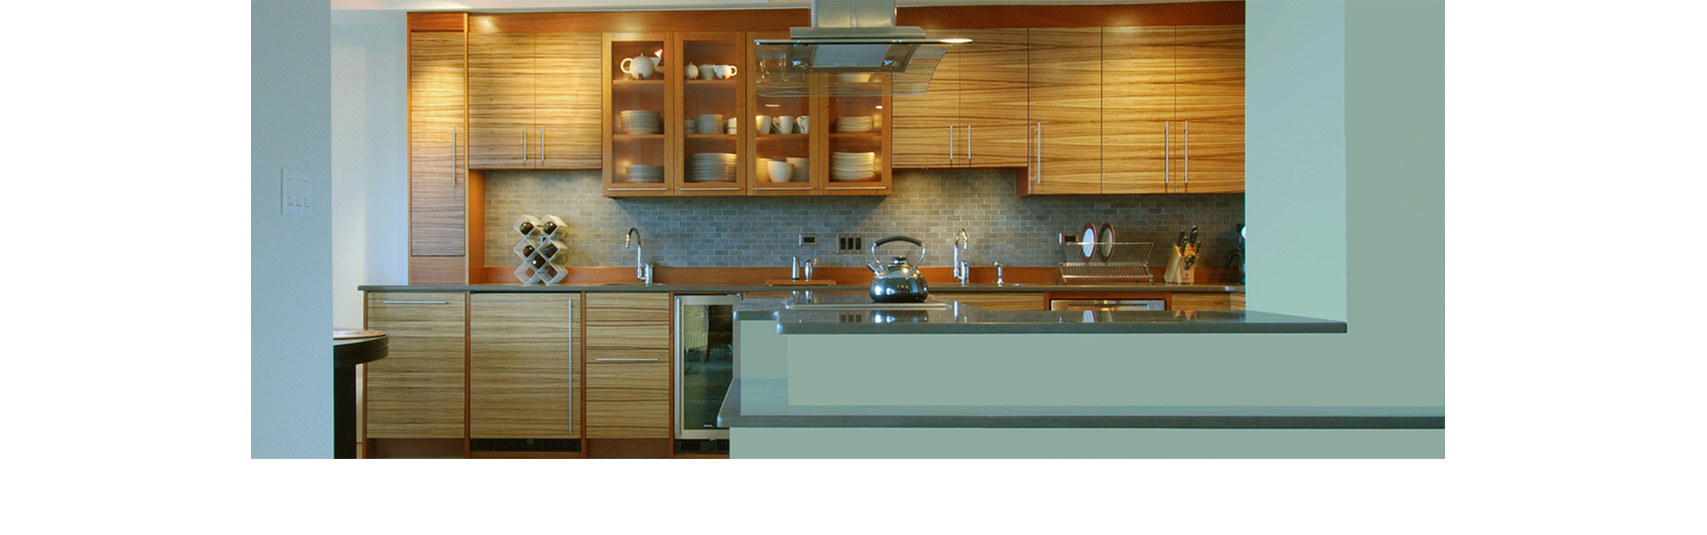 Custom kitchen remodel Sutton Yantis Associates Architects